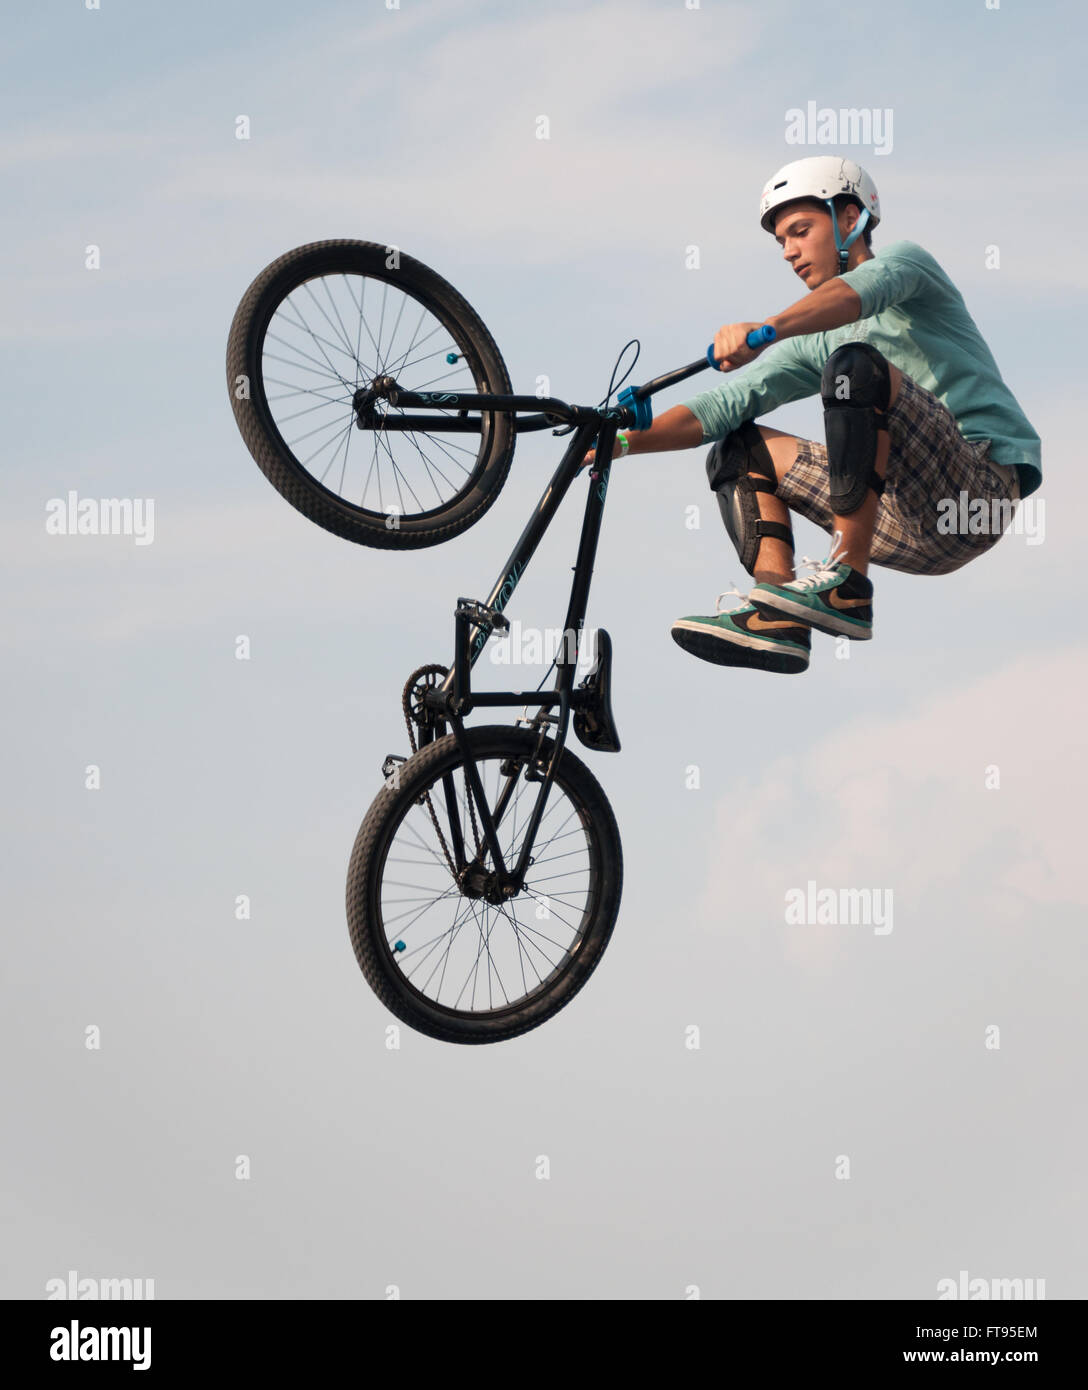 BMX biker jumping mid-air performing dirt jumping Stock Photo